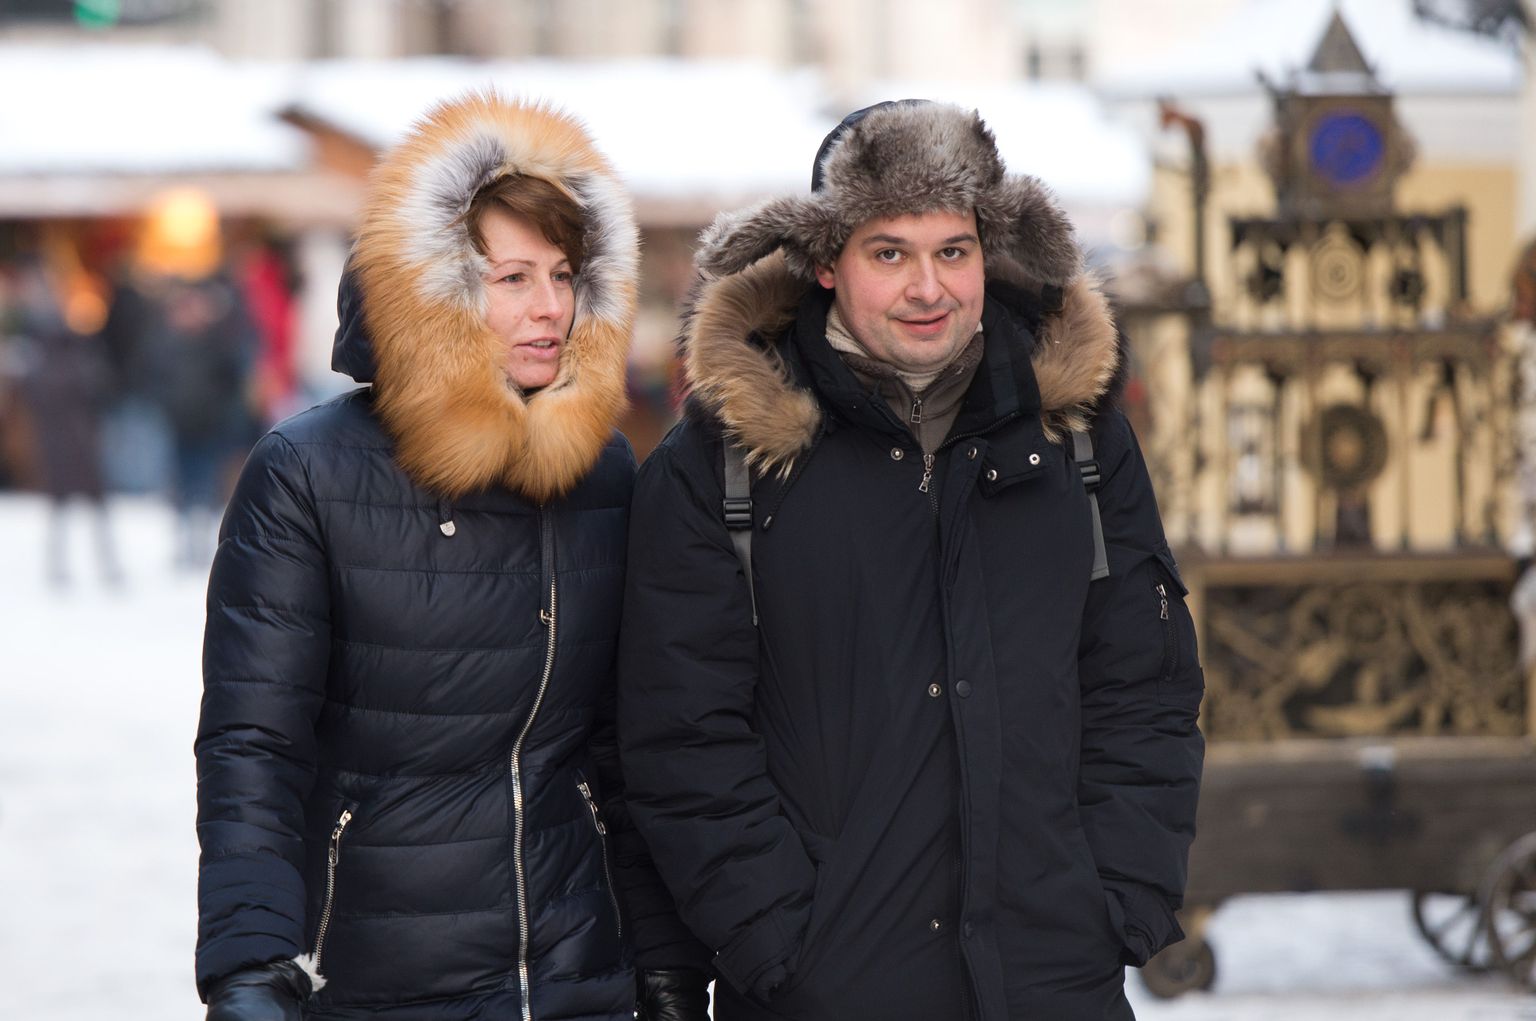 Vene turistid Tallinna vanalinnas